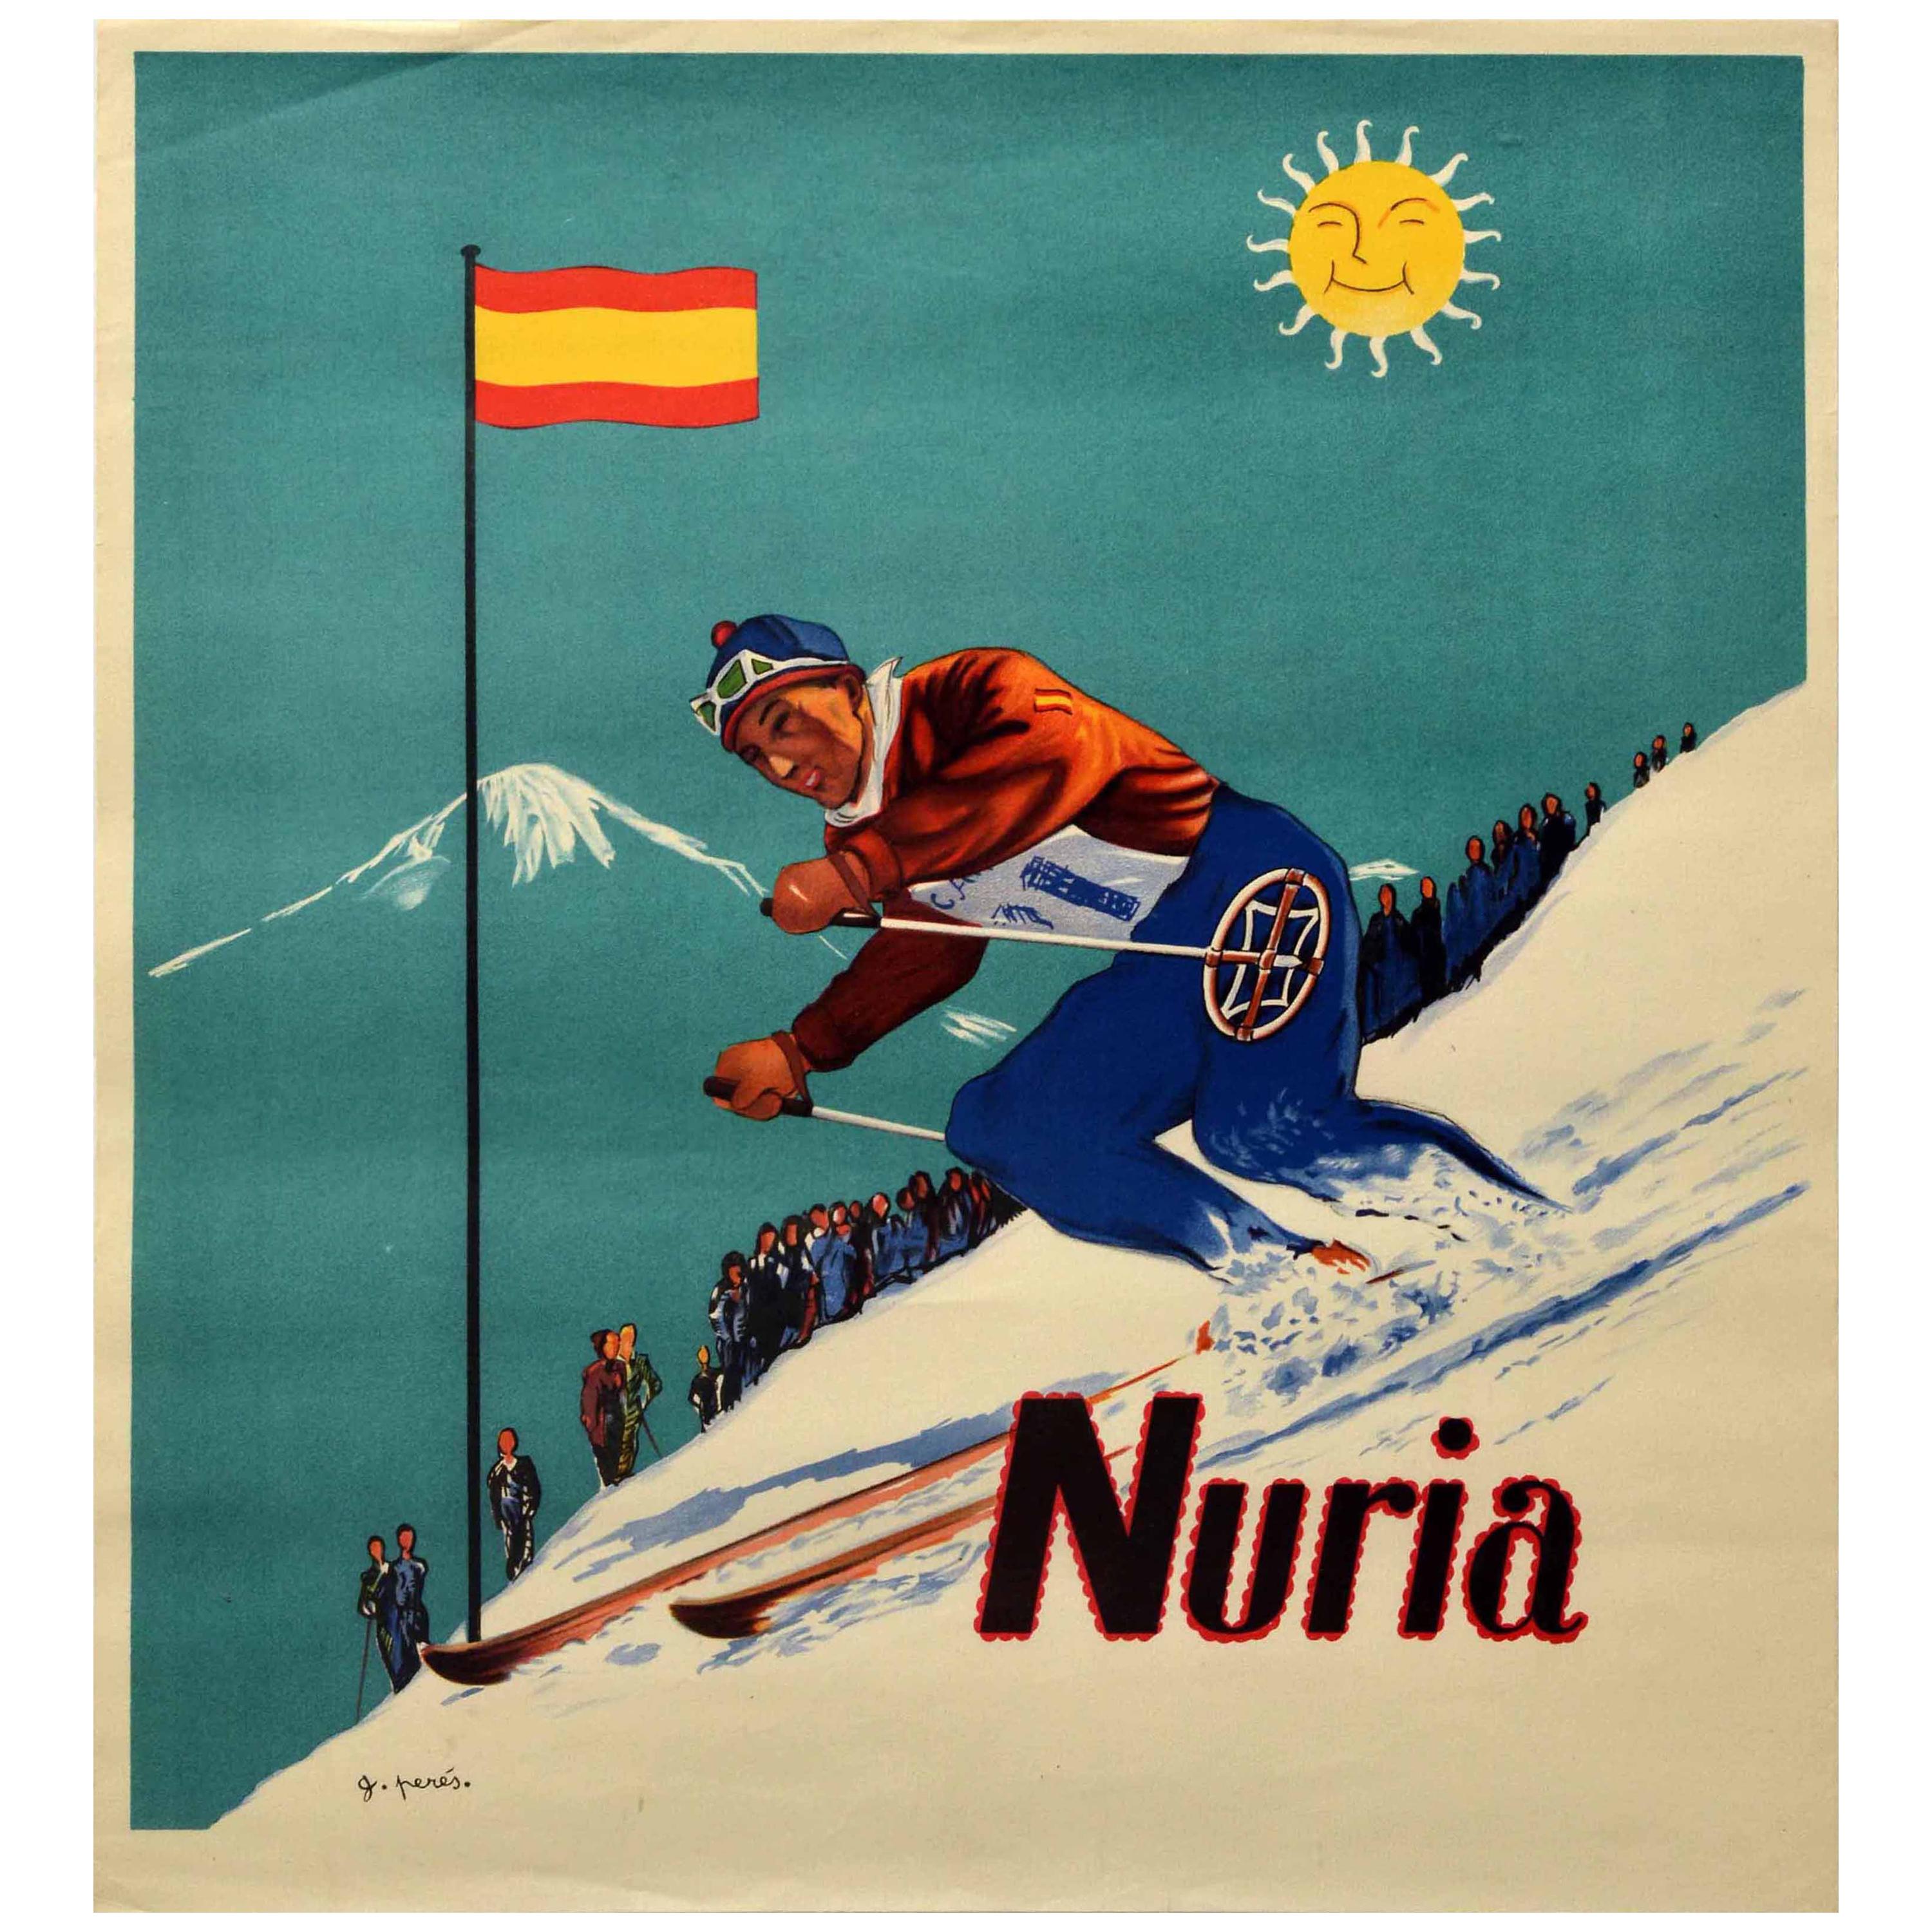 Original Vintage Skiing Poster Nuria Catalonia Spain Pyrenees Ski Winter Sport